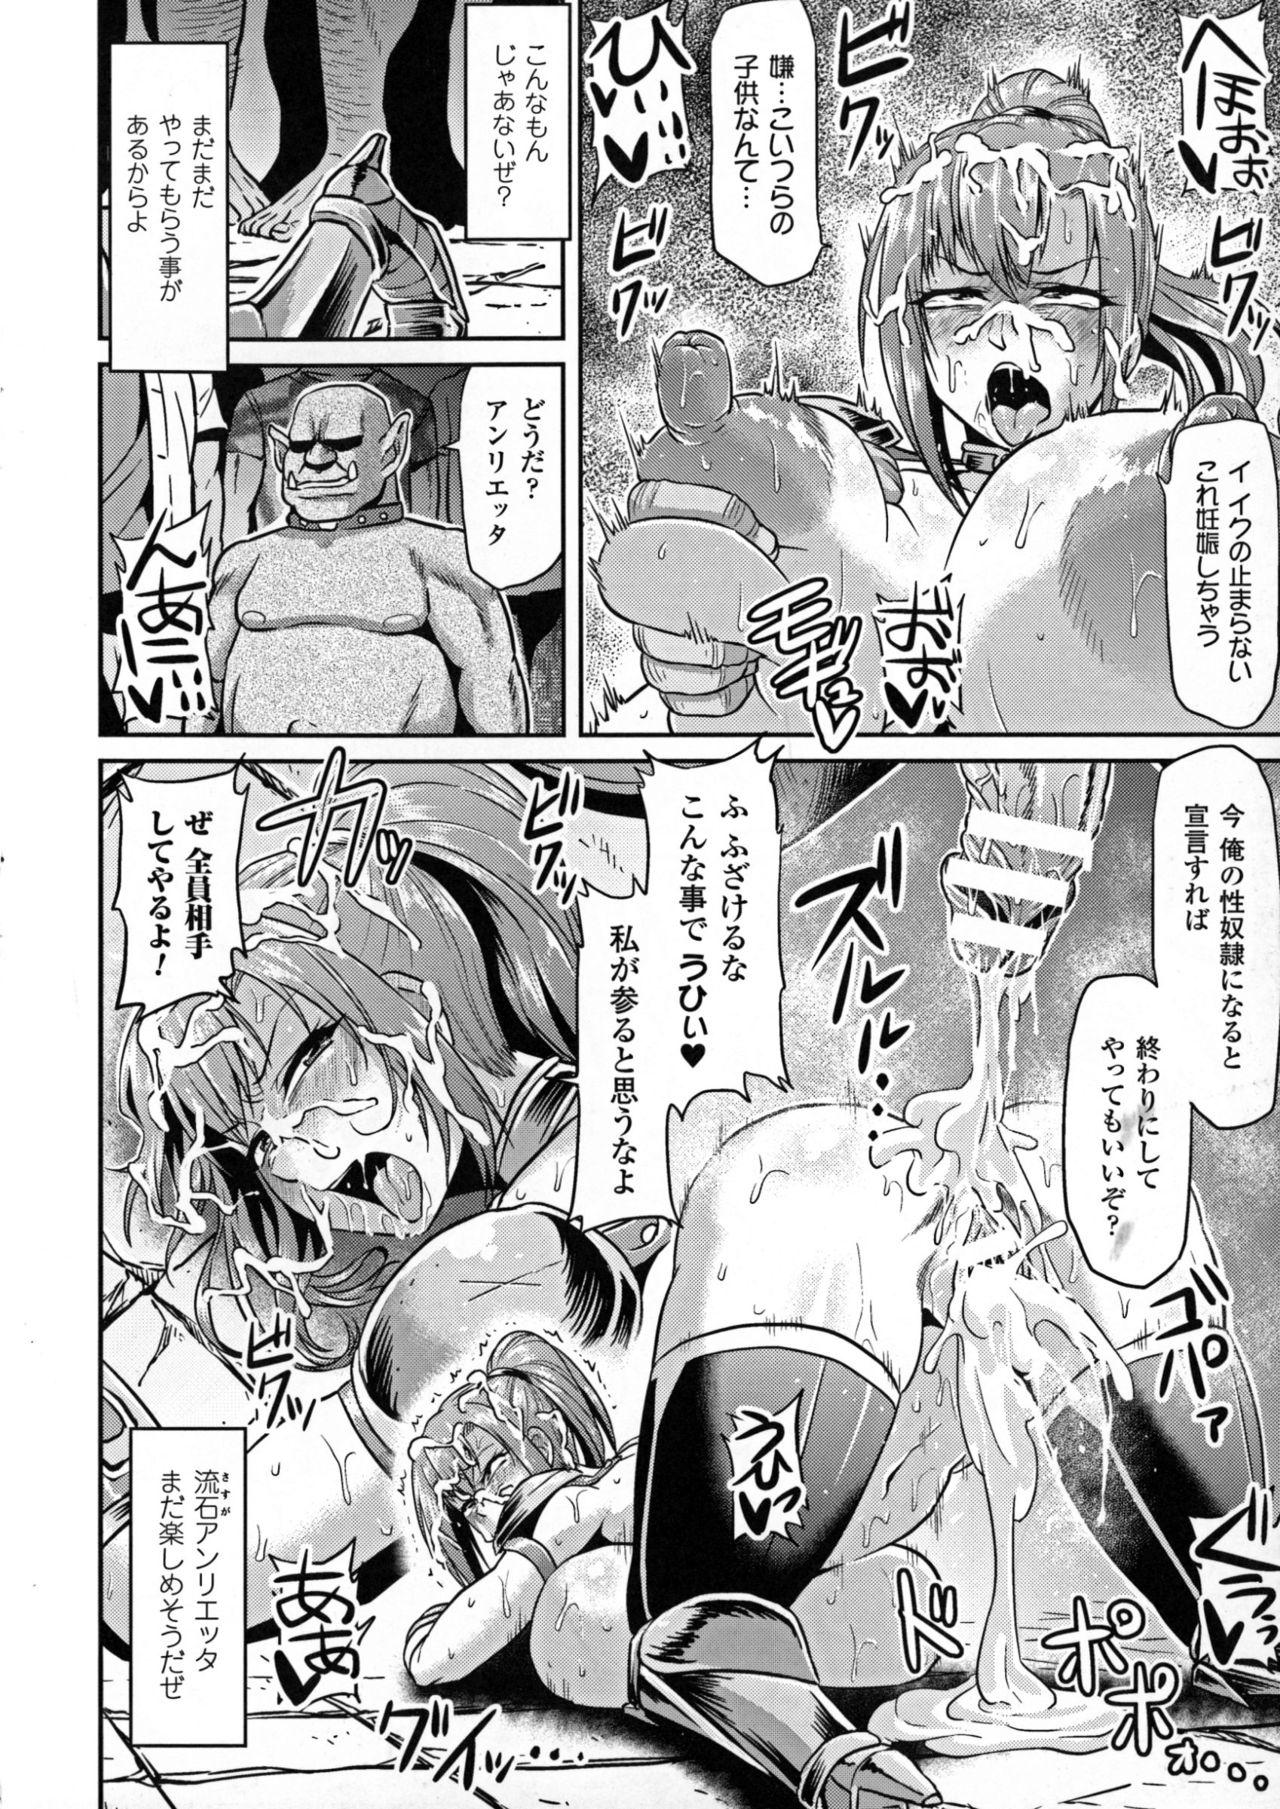 Seigi no Heroine Kangoku File DX Vol. 7 148